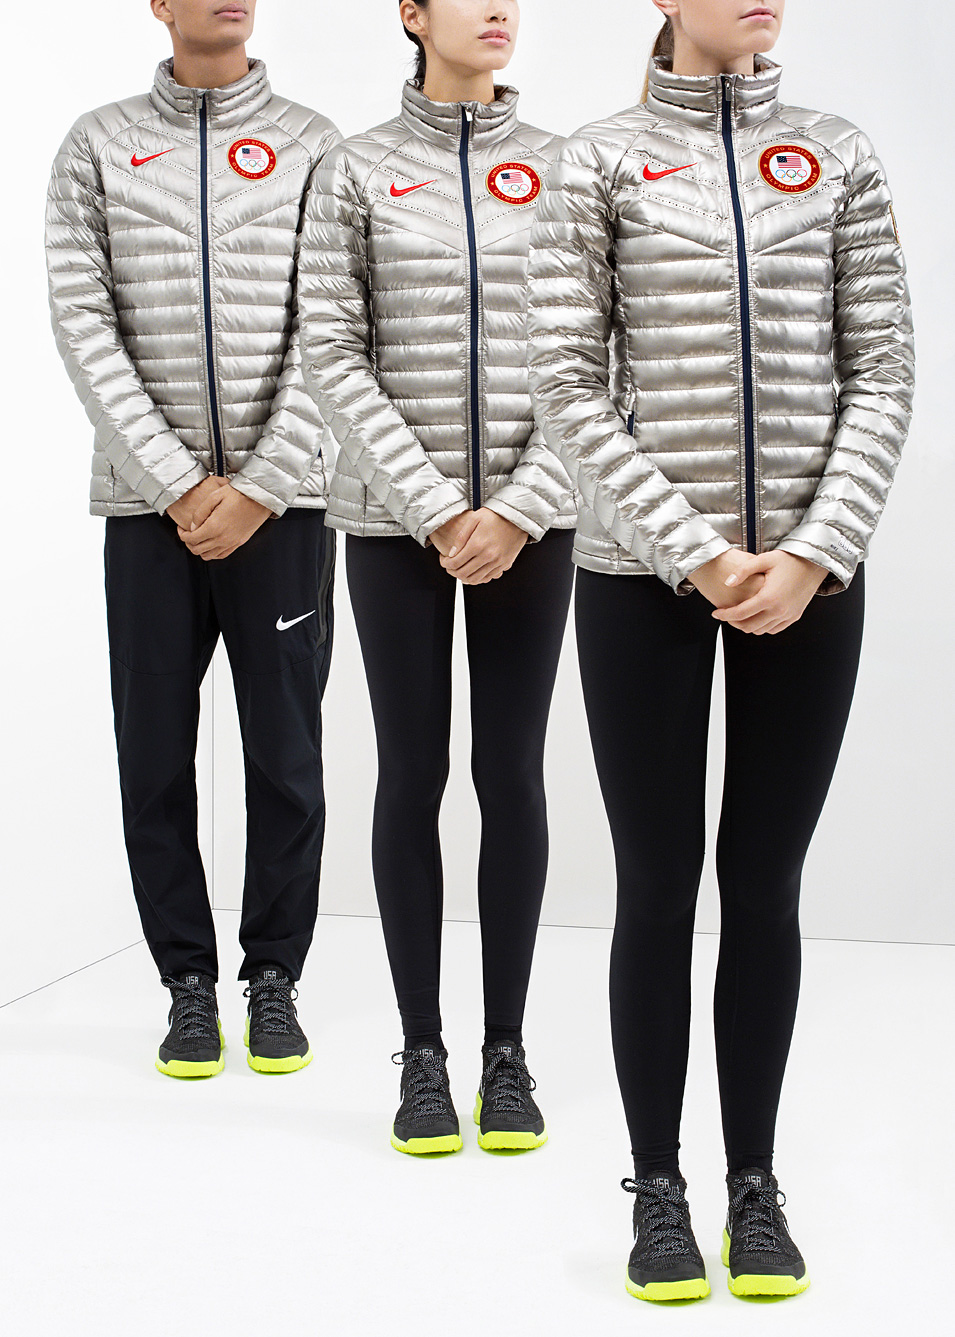 Nike-Team-USA-Winter-Collection-02